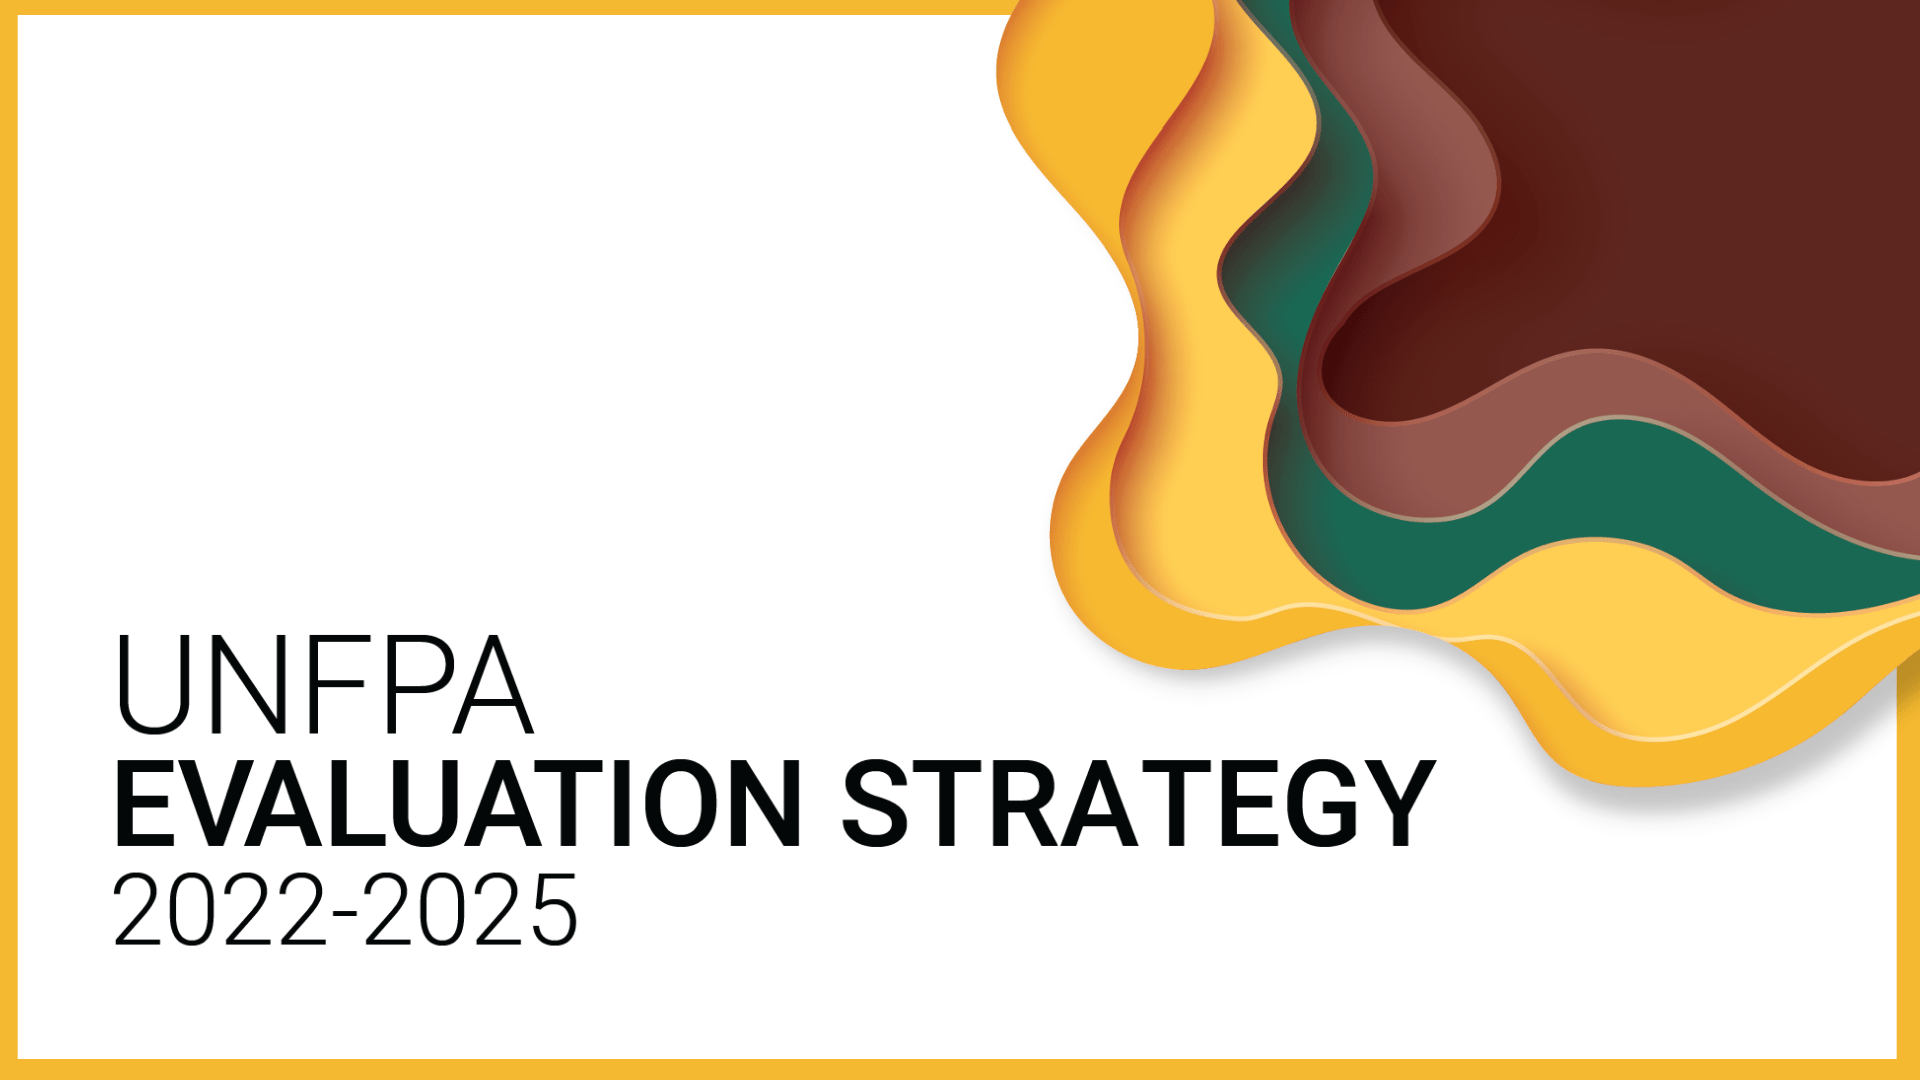 UNFPA evaluation strategy, 2022-2025